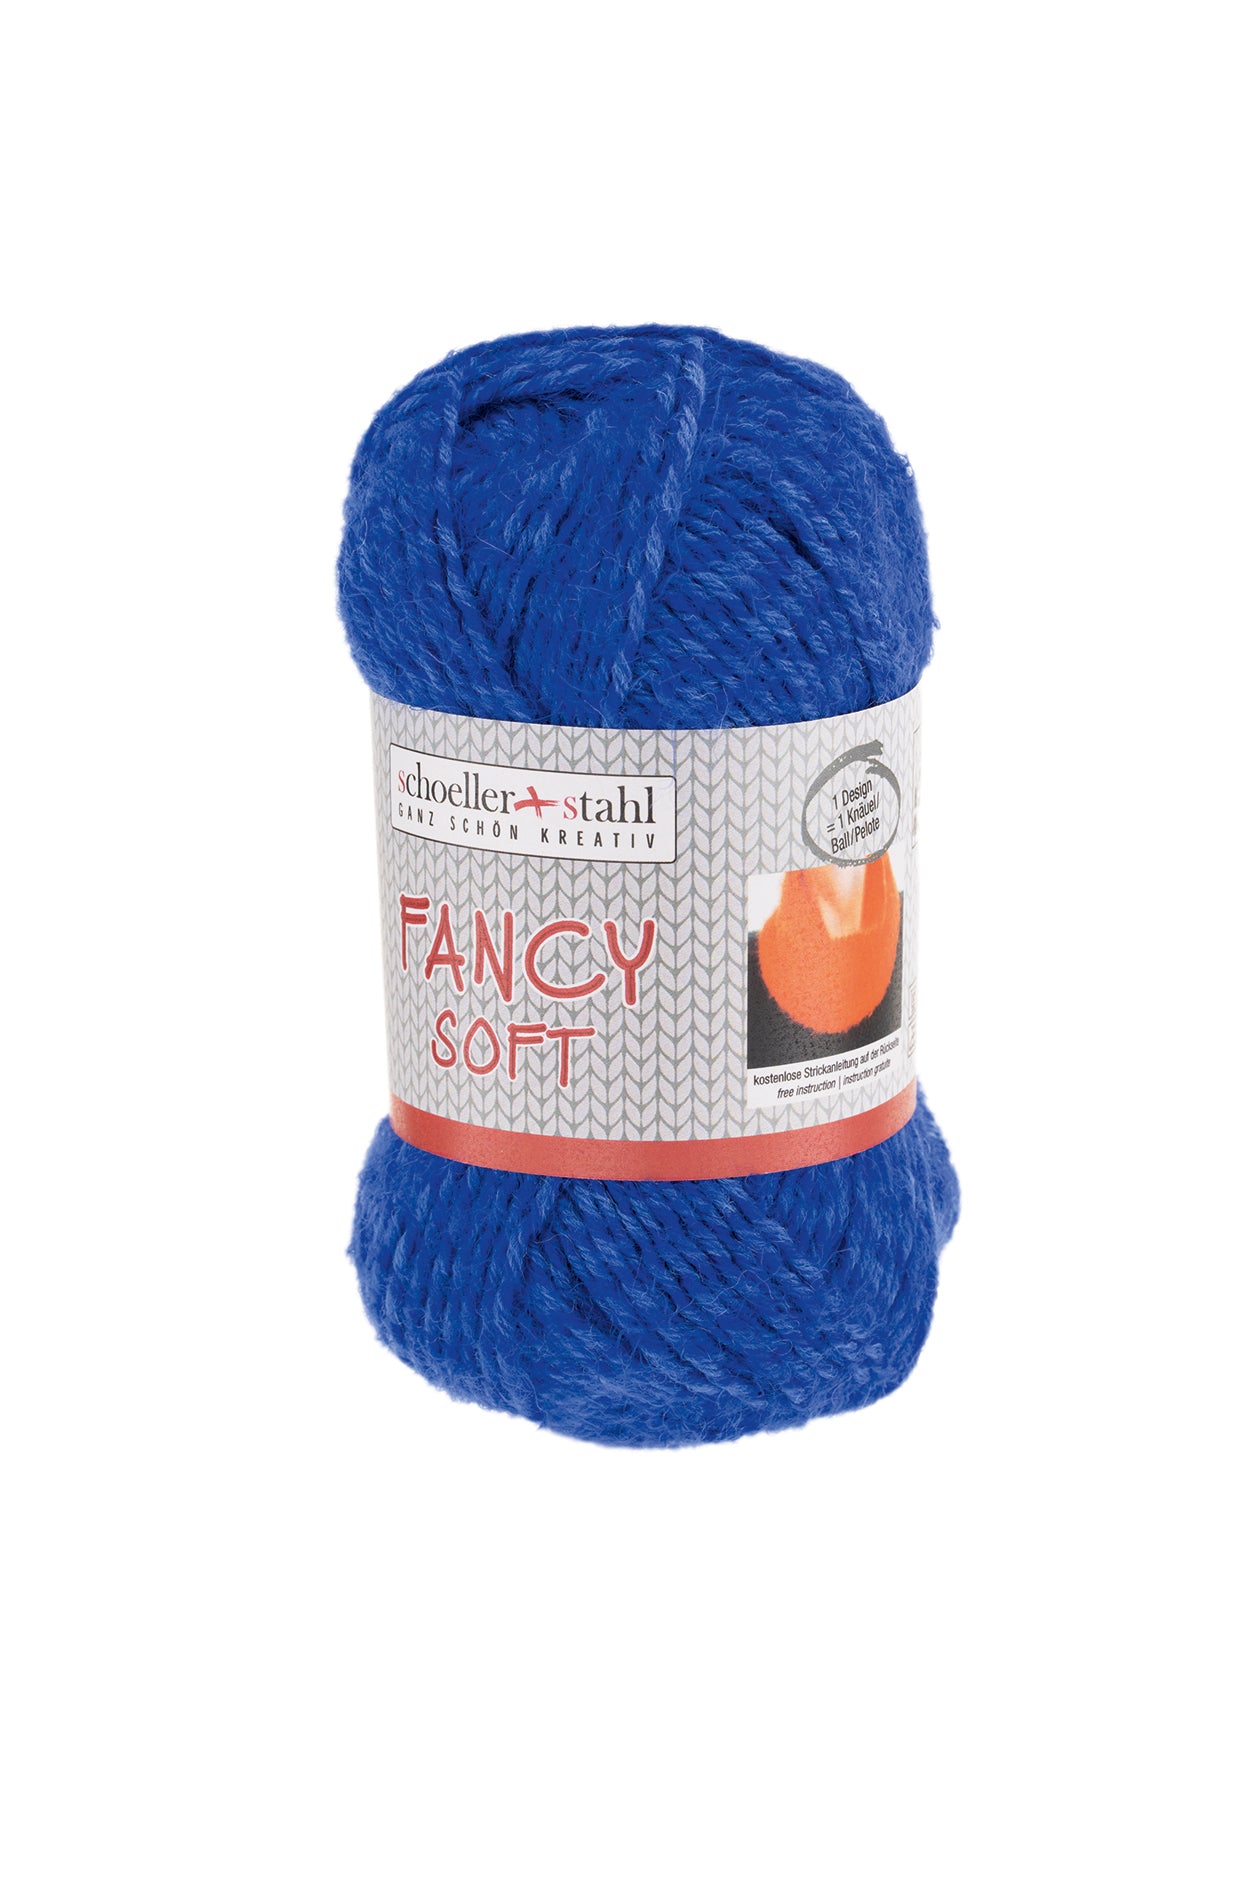 Fancy Soft  50g, 90233, Farbe 9, royal